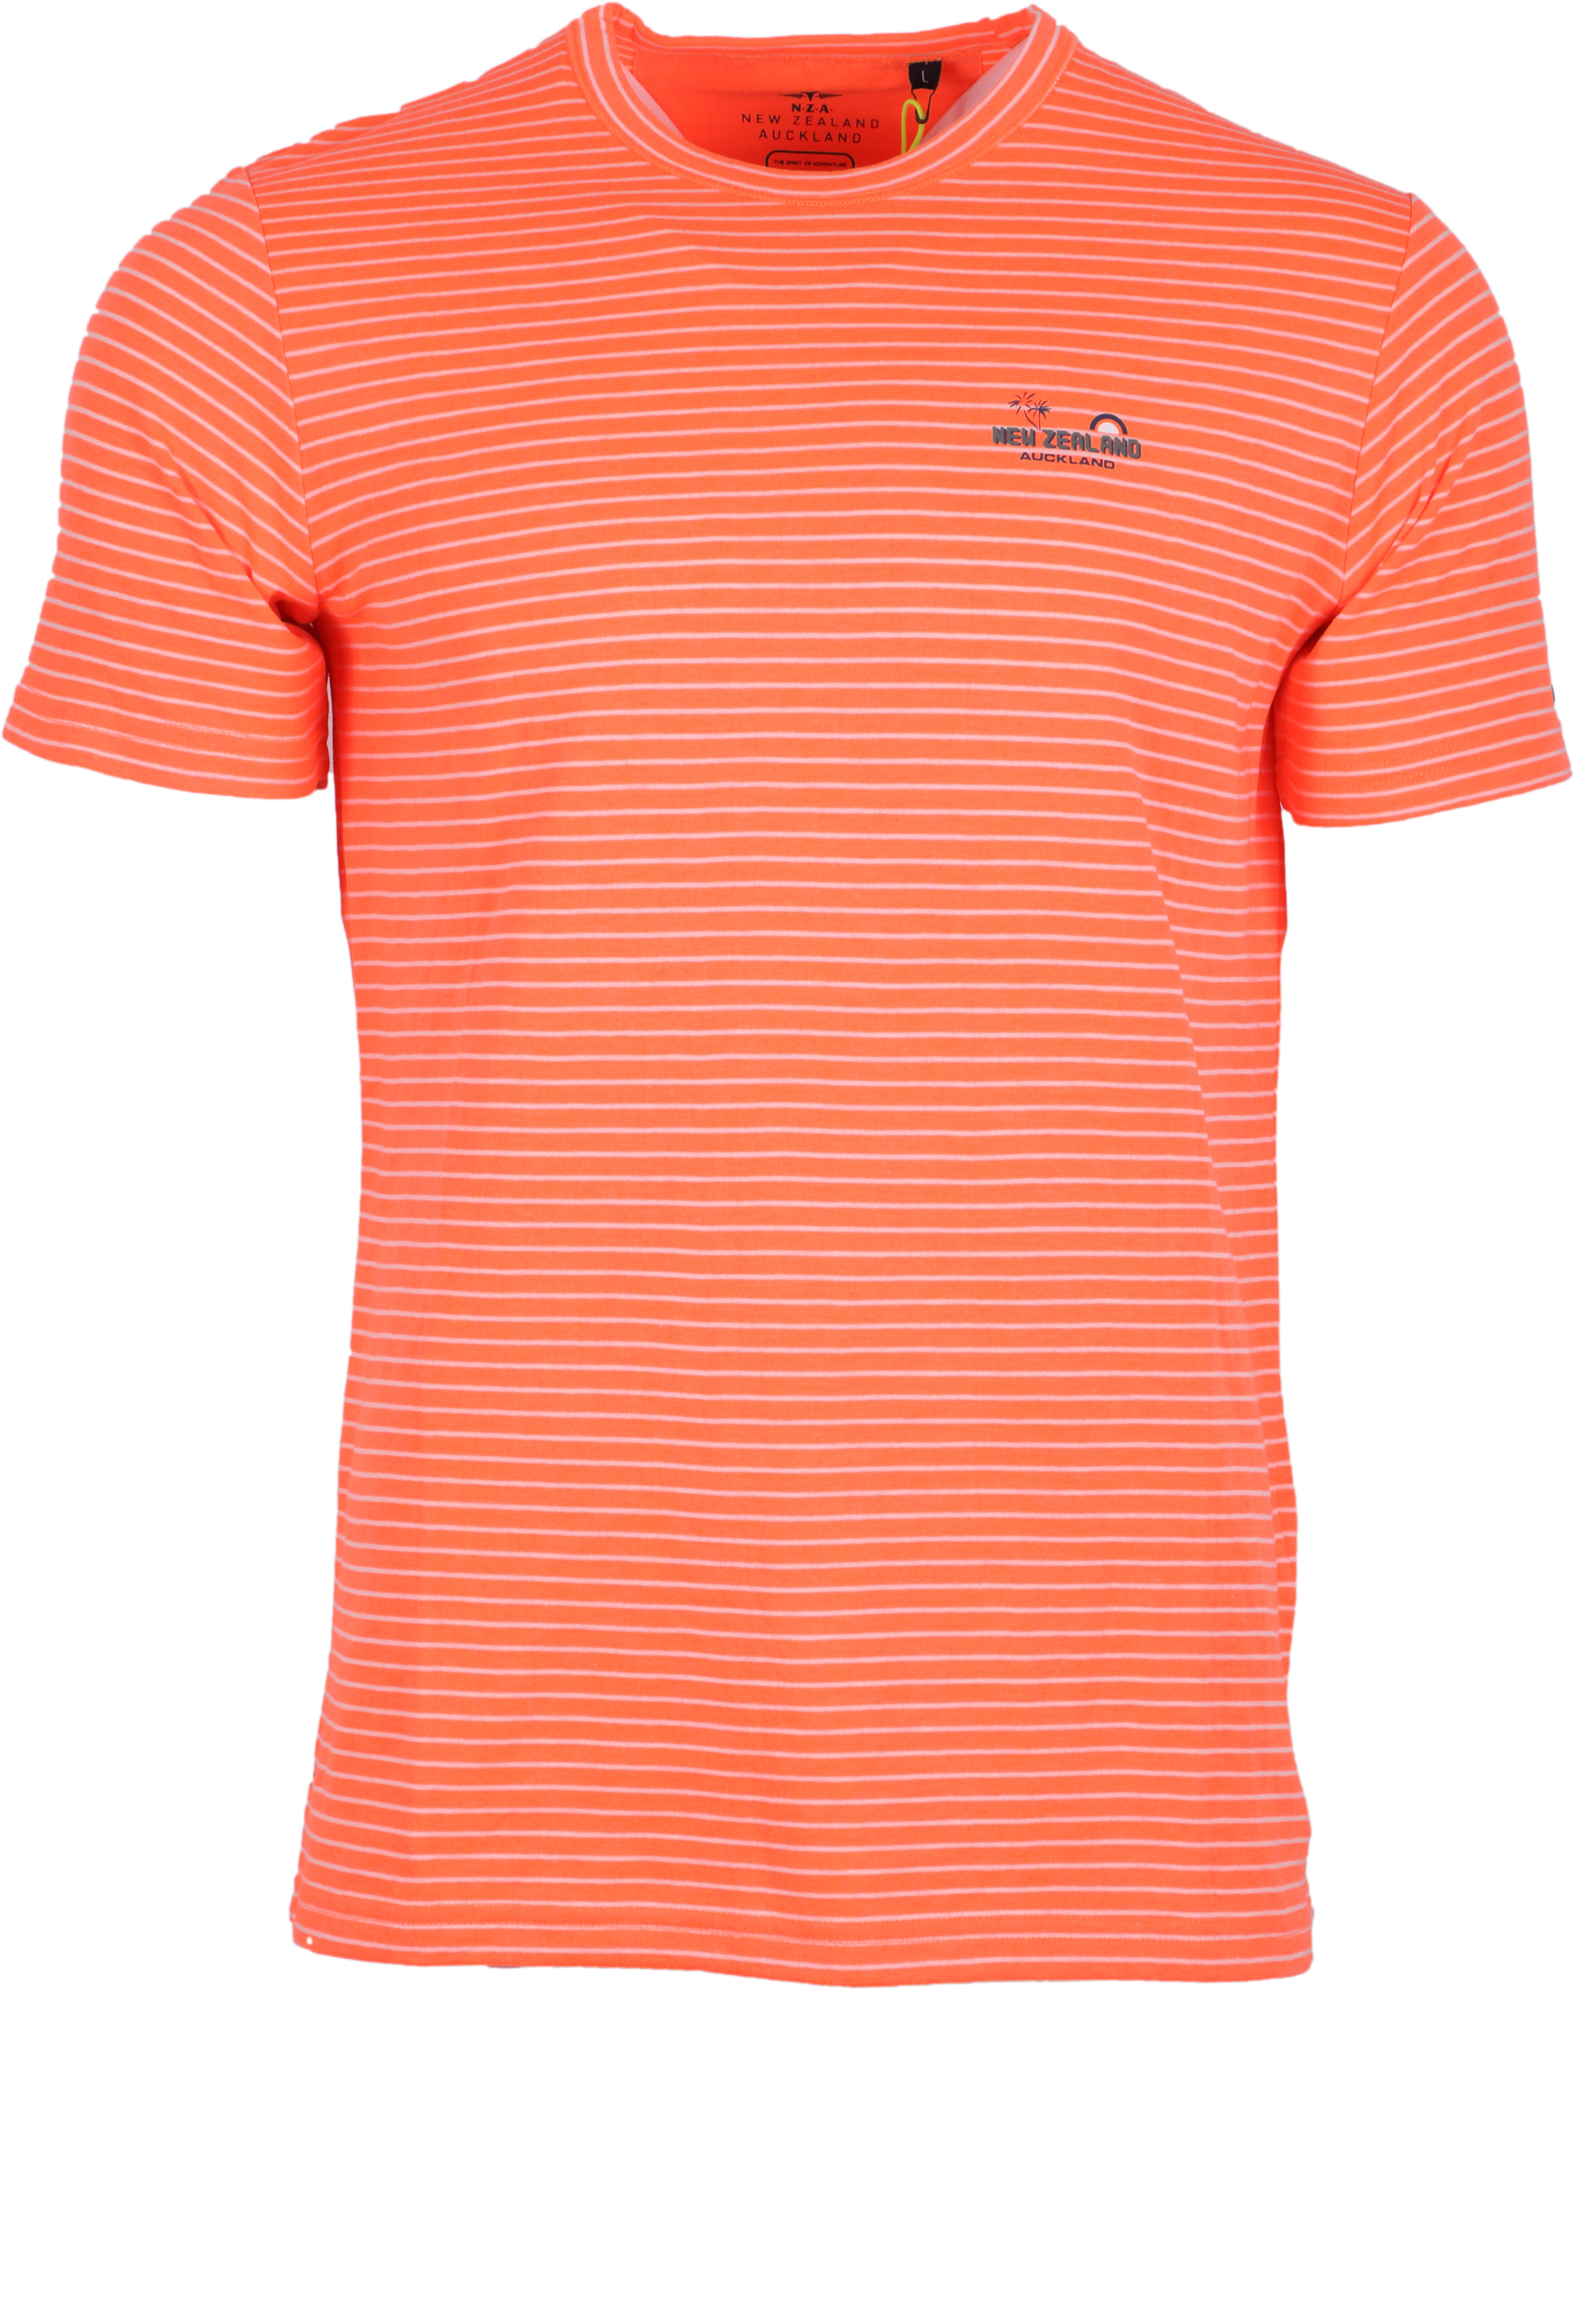 NZA New Zealand Auckland T-Shirt Wimbledon - orange L